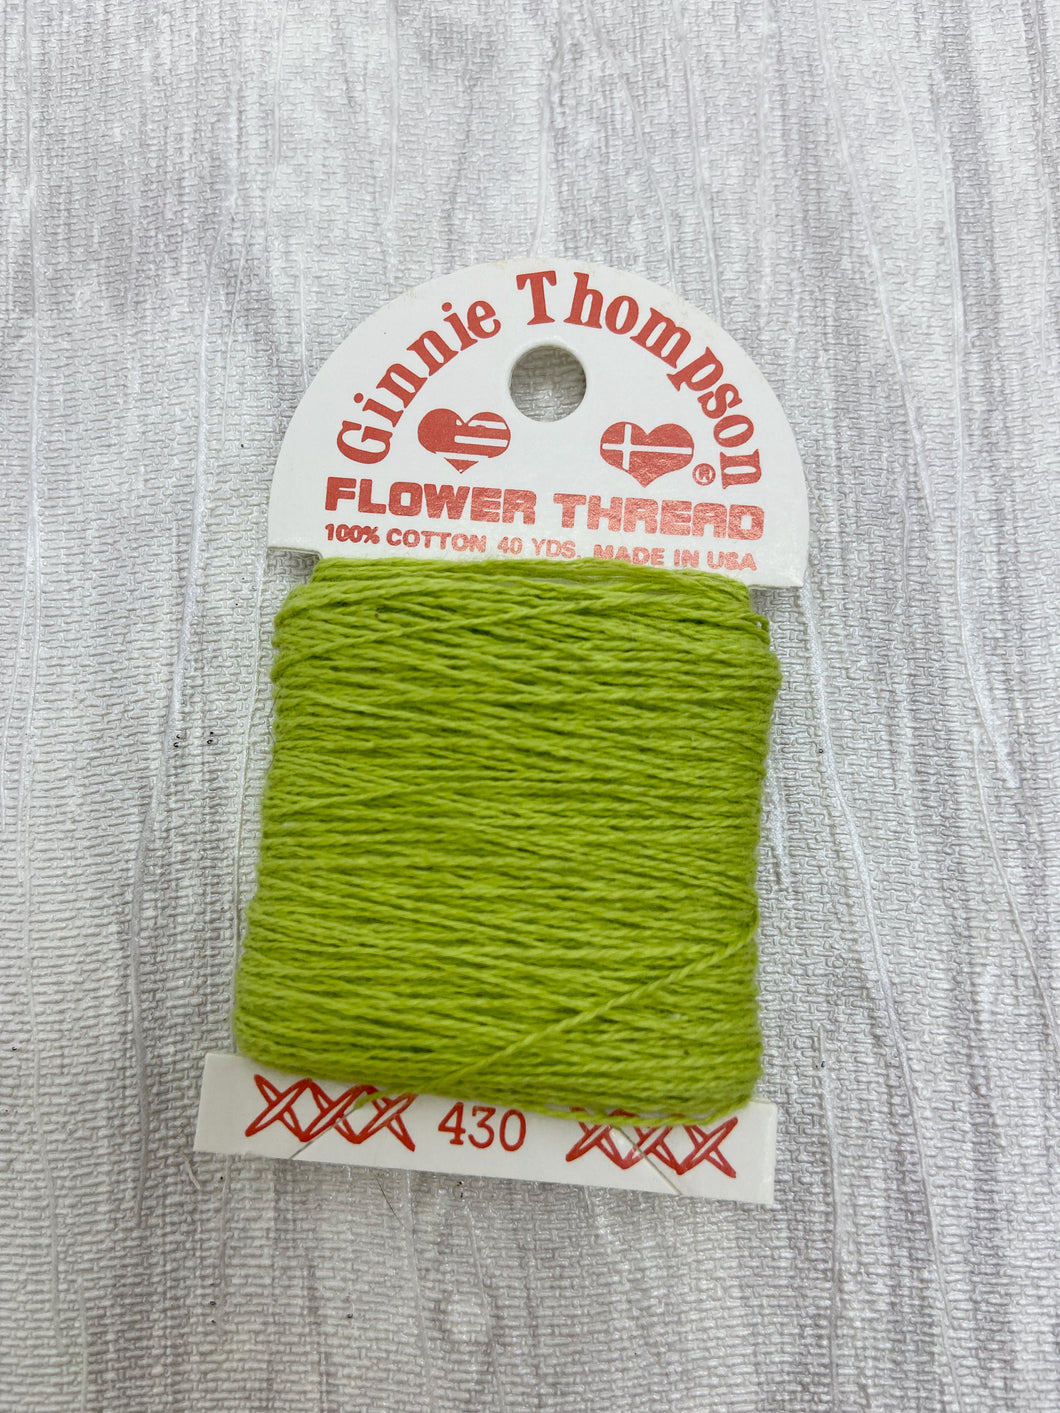 Very Light Yellow Green (430) Ginnie Thompson Flower Thread